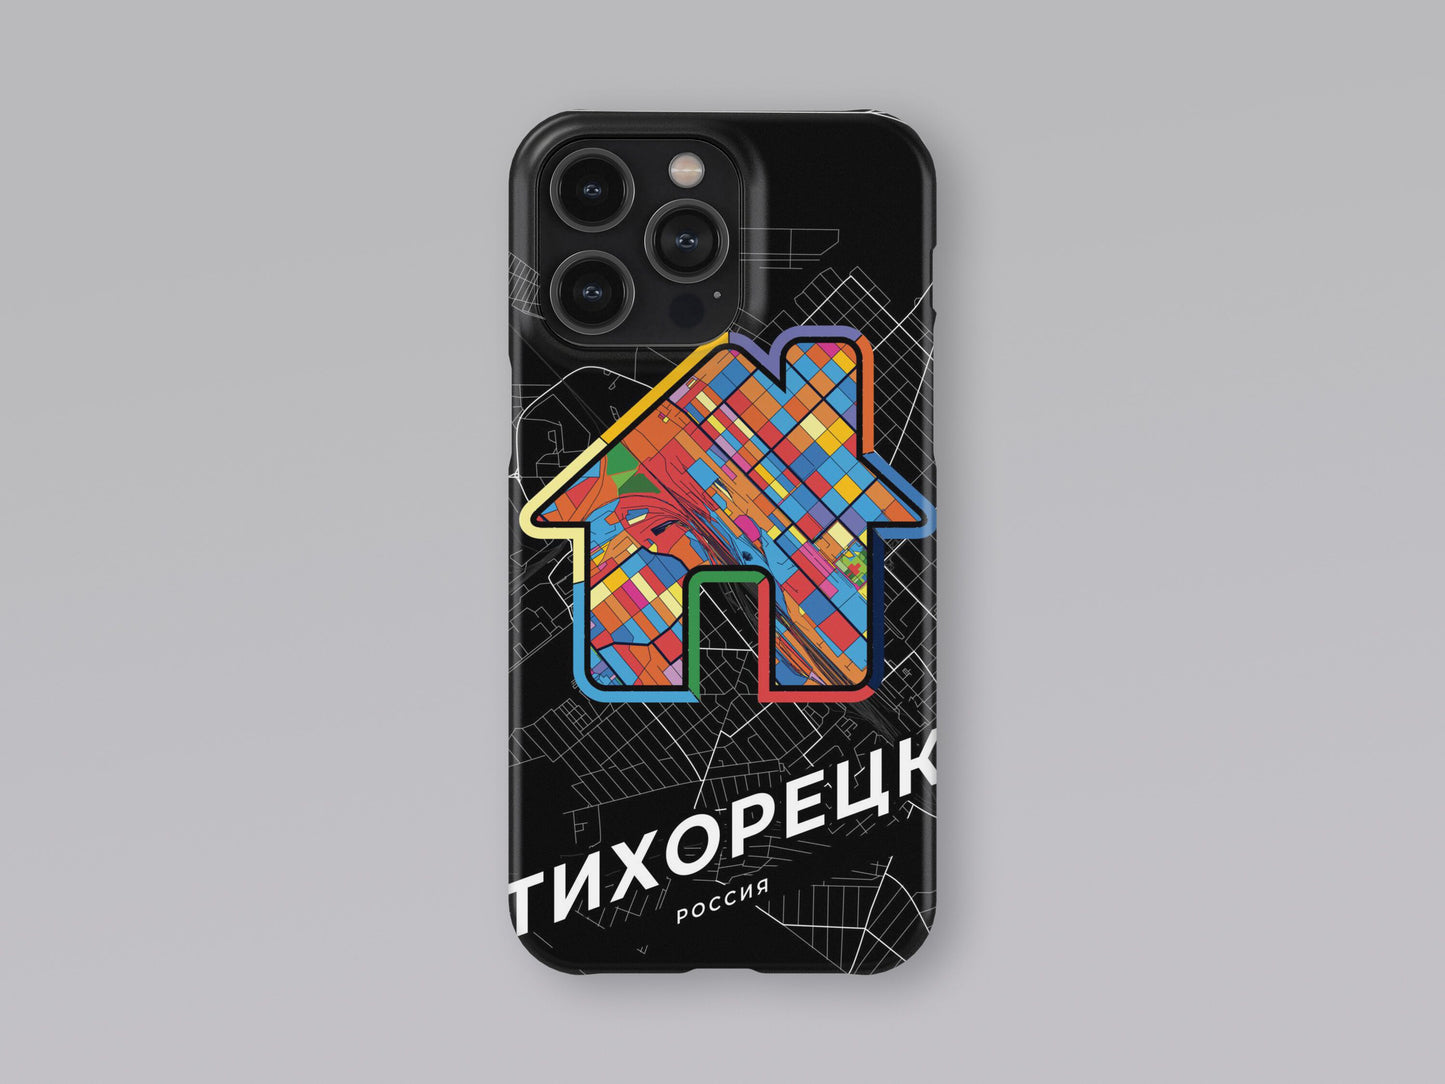 Tikhoretsk Russia slim phone case with colorful icon 3